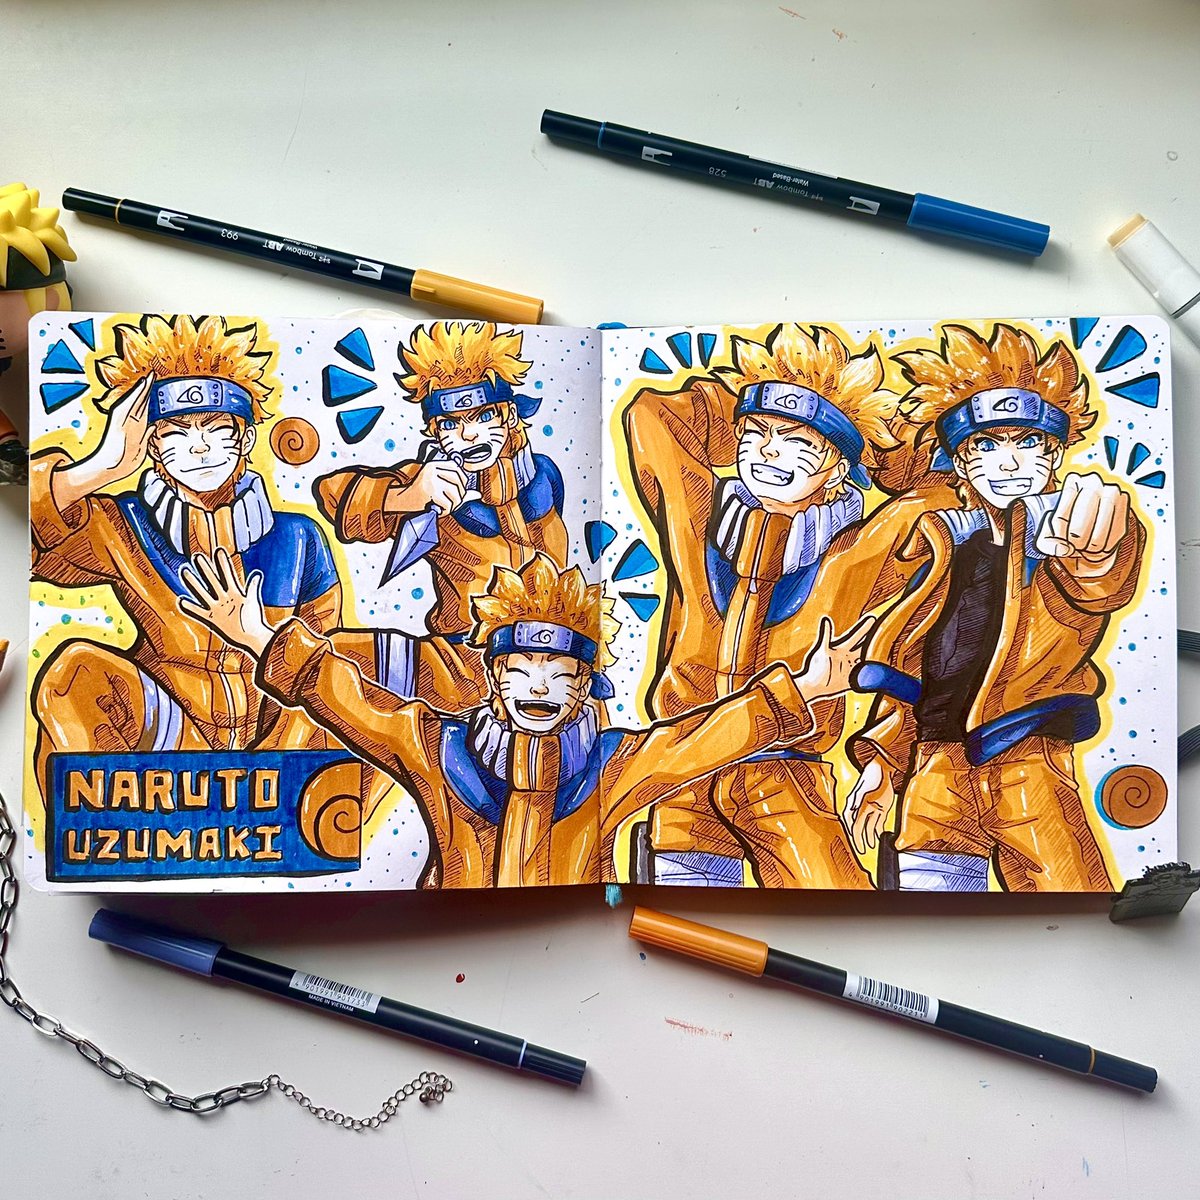 Naruto Uzumaki! The Next Hokage! Believe it! 🧡💙💥

I’m on a little bit of a Naruto rewatching spree again, so here’s the boy himself in his original series outfit! 

#naruto #narutoshippuden #narutouzumaki #narutofanart #art #drawing #illustration #sketchbook #sketchbookart